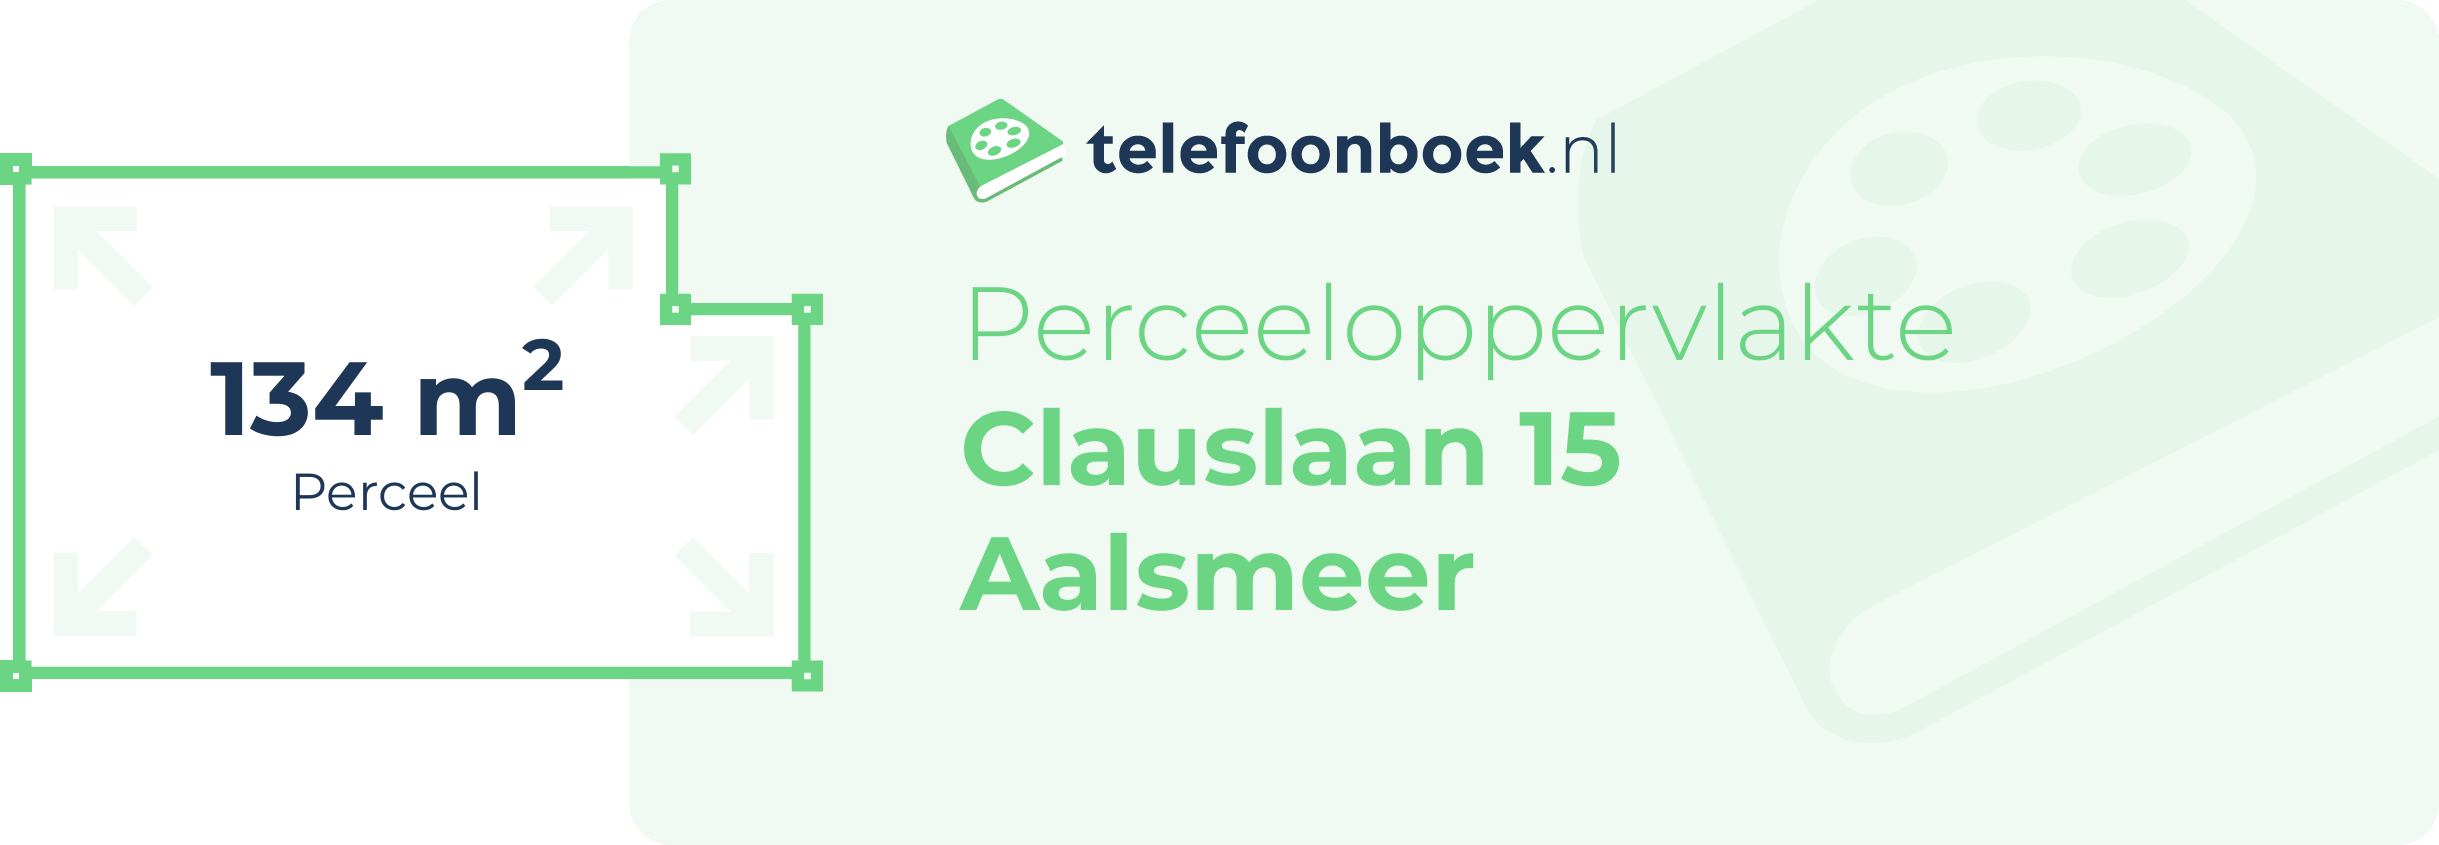 Perceeloppervlakte Clauslaan 15 Aalsmeer